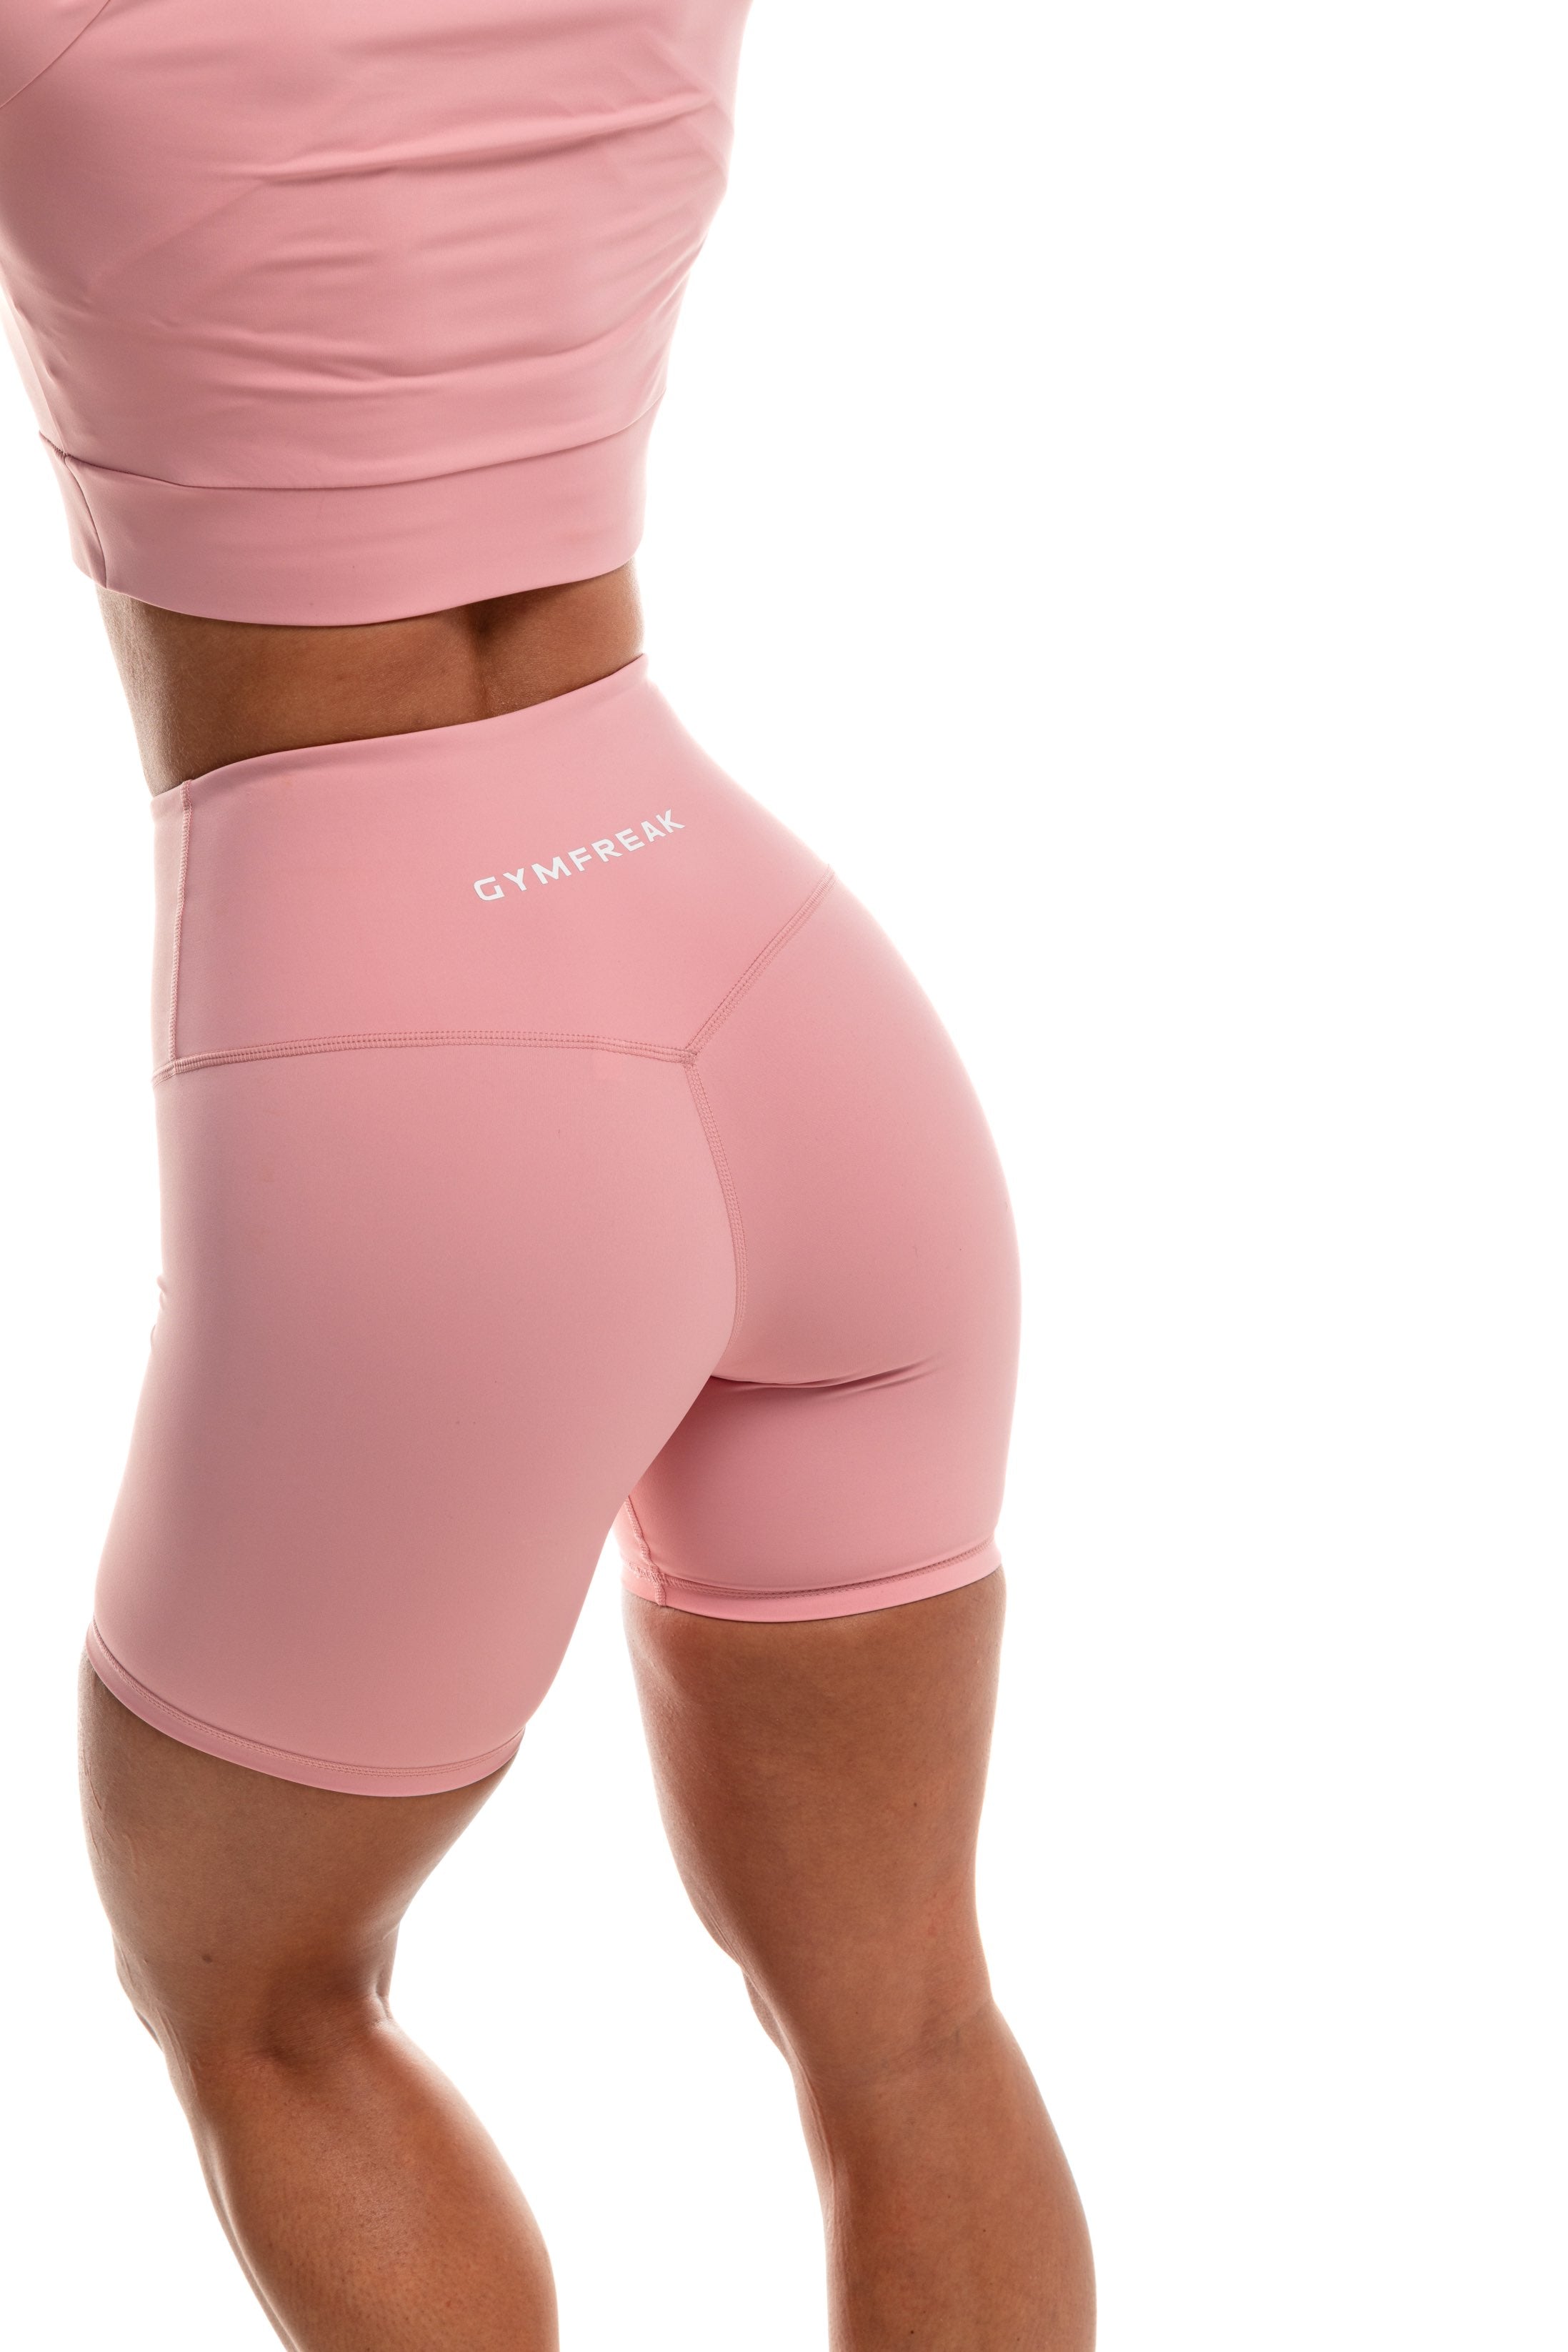 GymFreak Women's Vision Shorts - 6 inch Pink